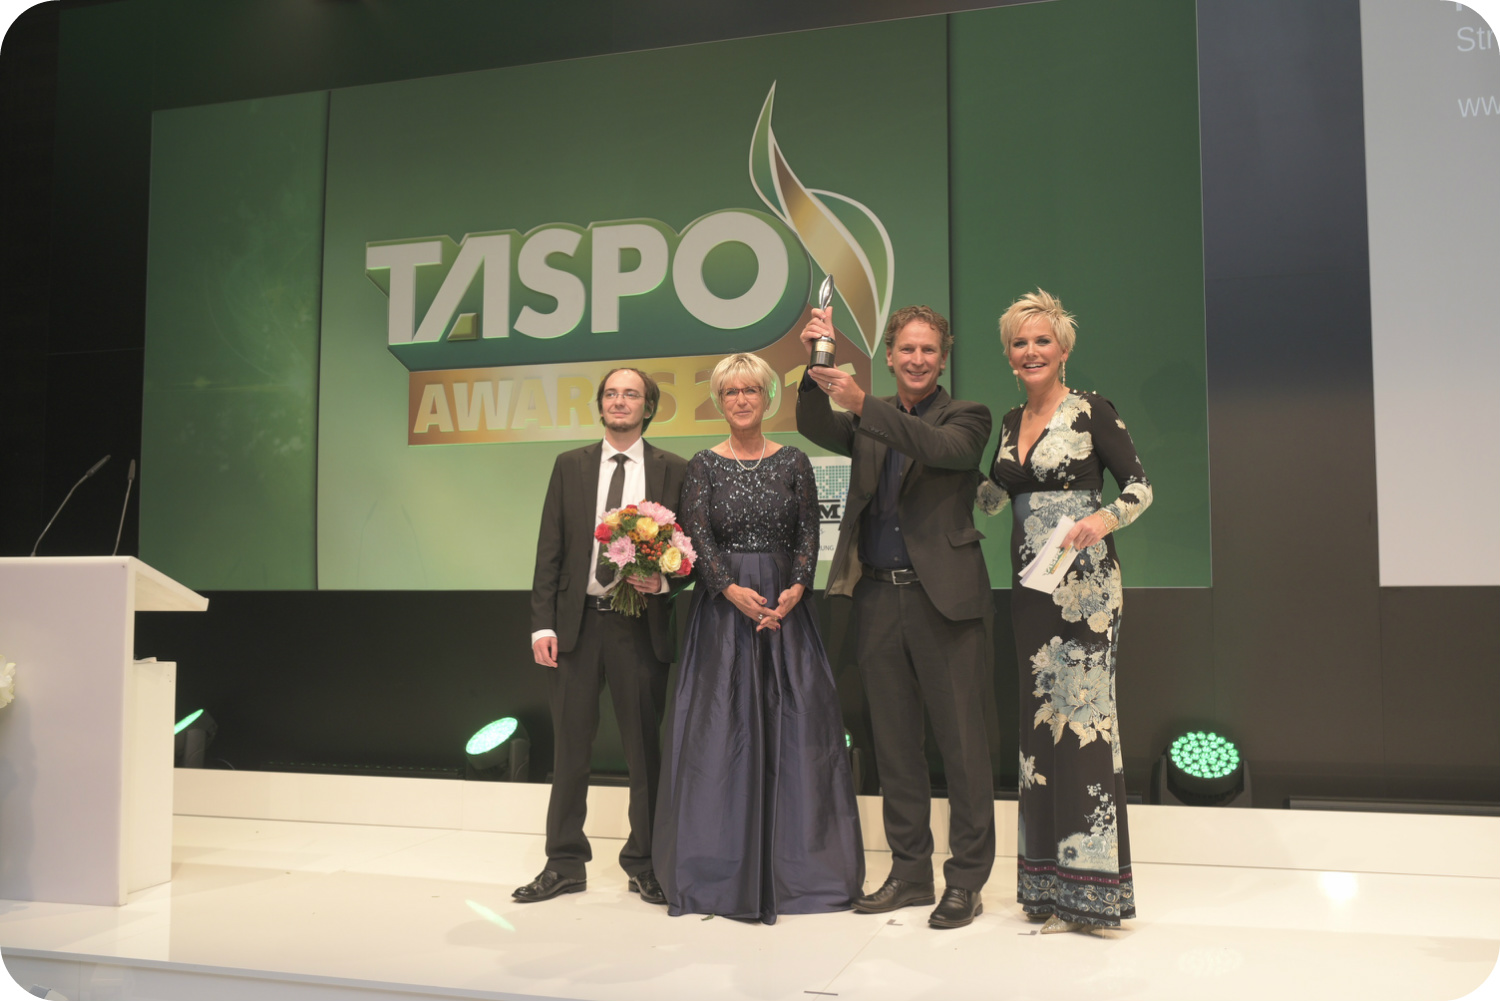 TASPO Award pressefoto